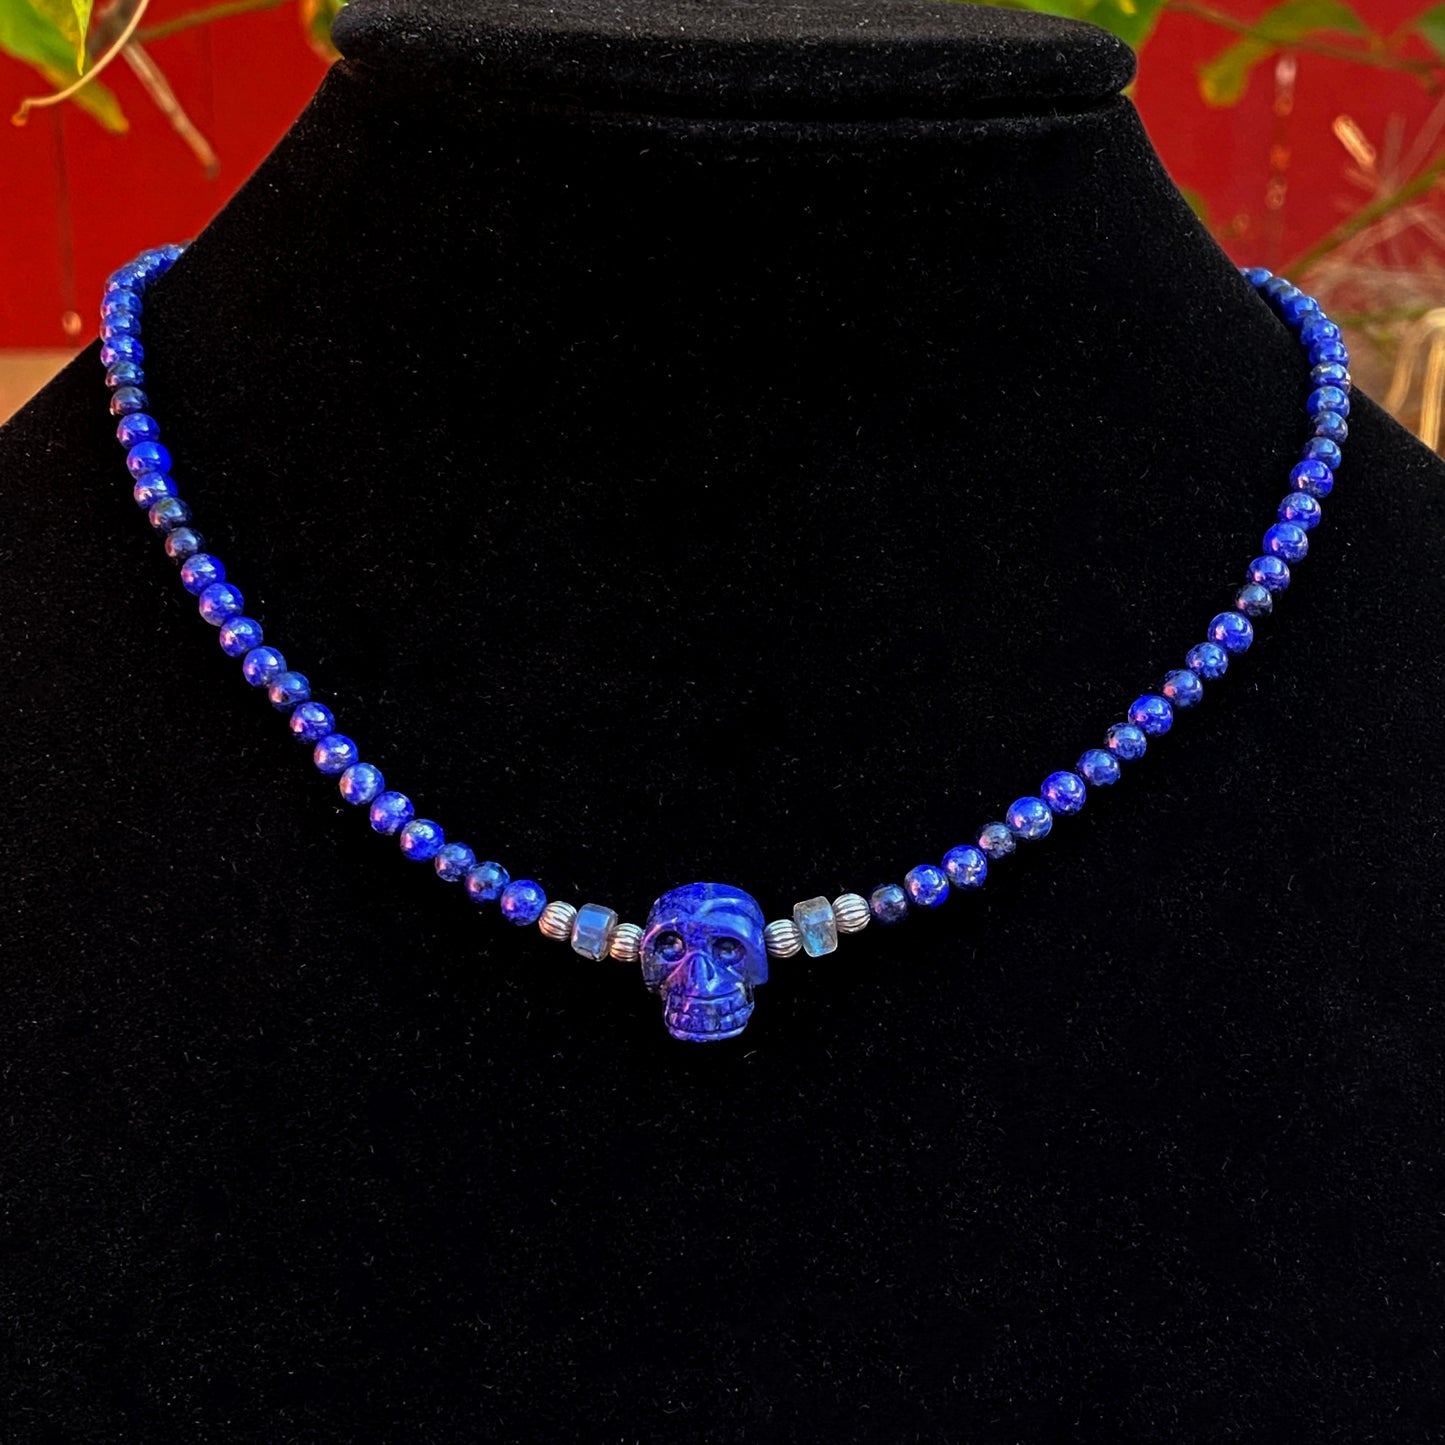 Lapis Lazuli, Labradorite gemstones, and Sterling Silver Skull Choker